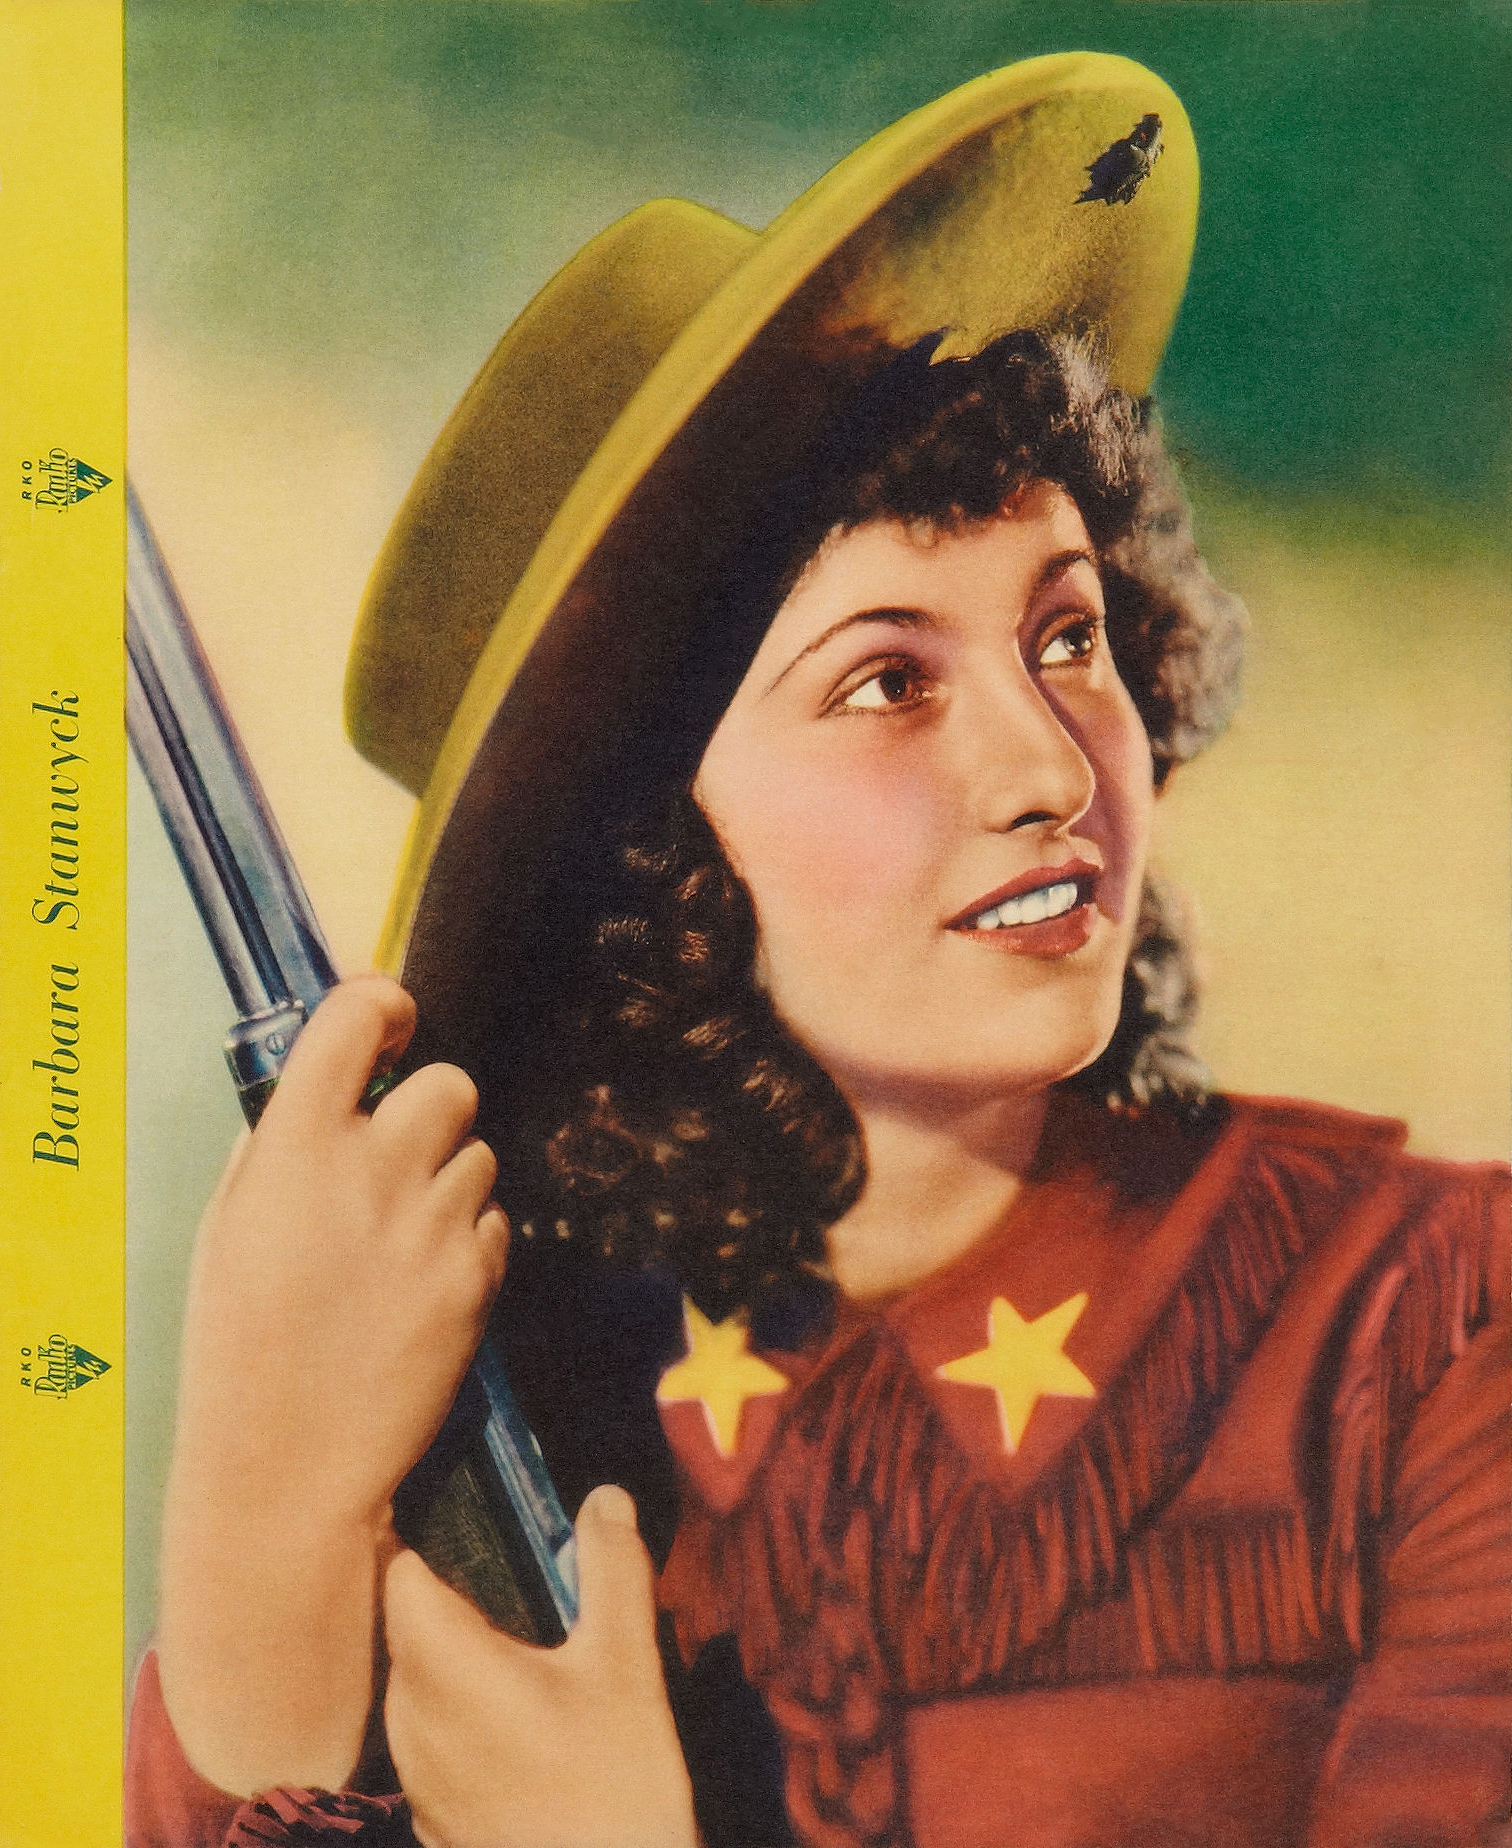 Review: Annie Oakley (film) - Girls With Guns